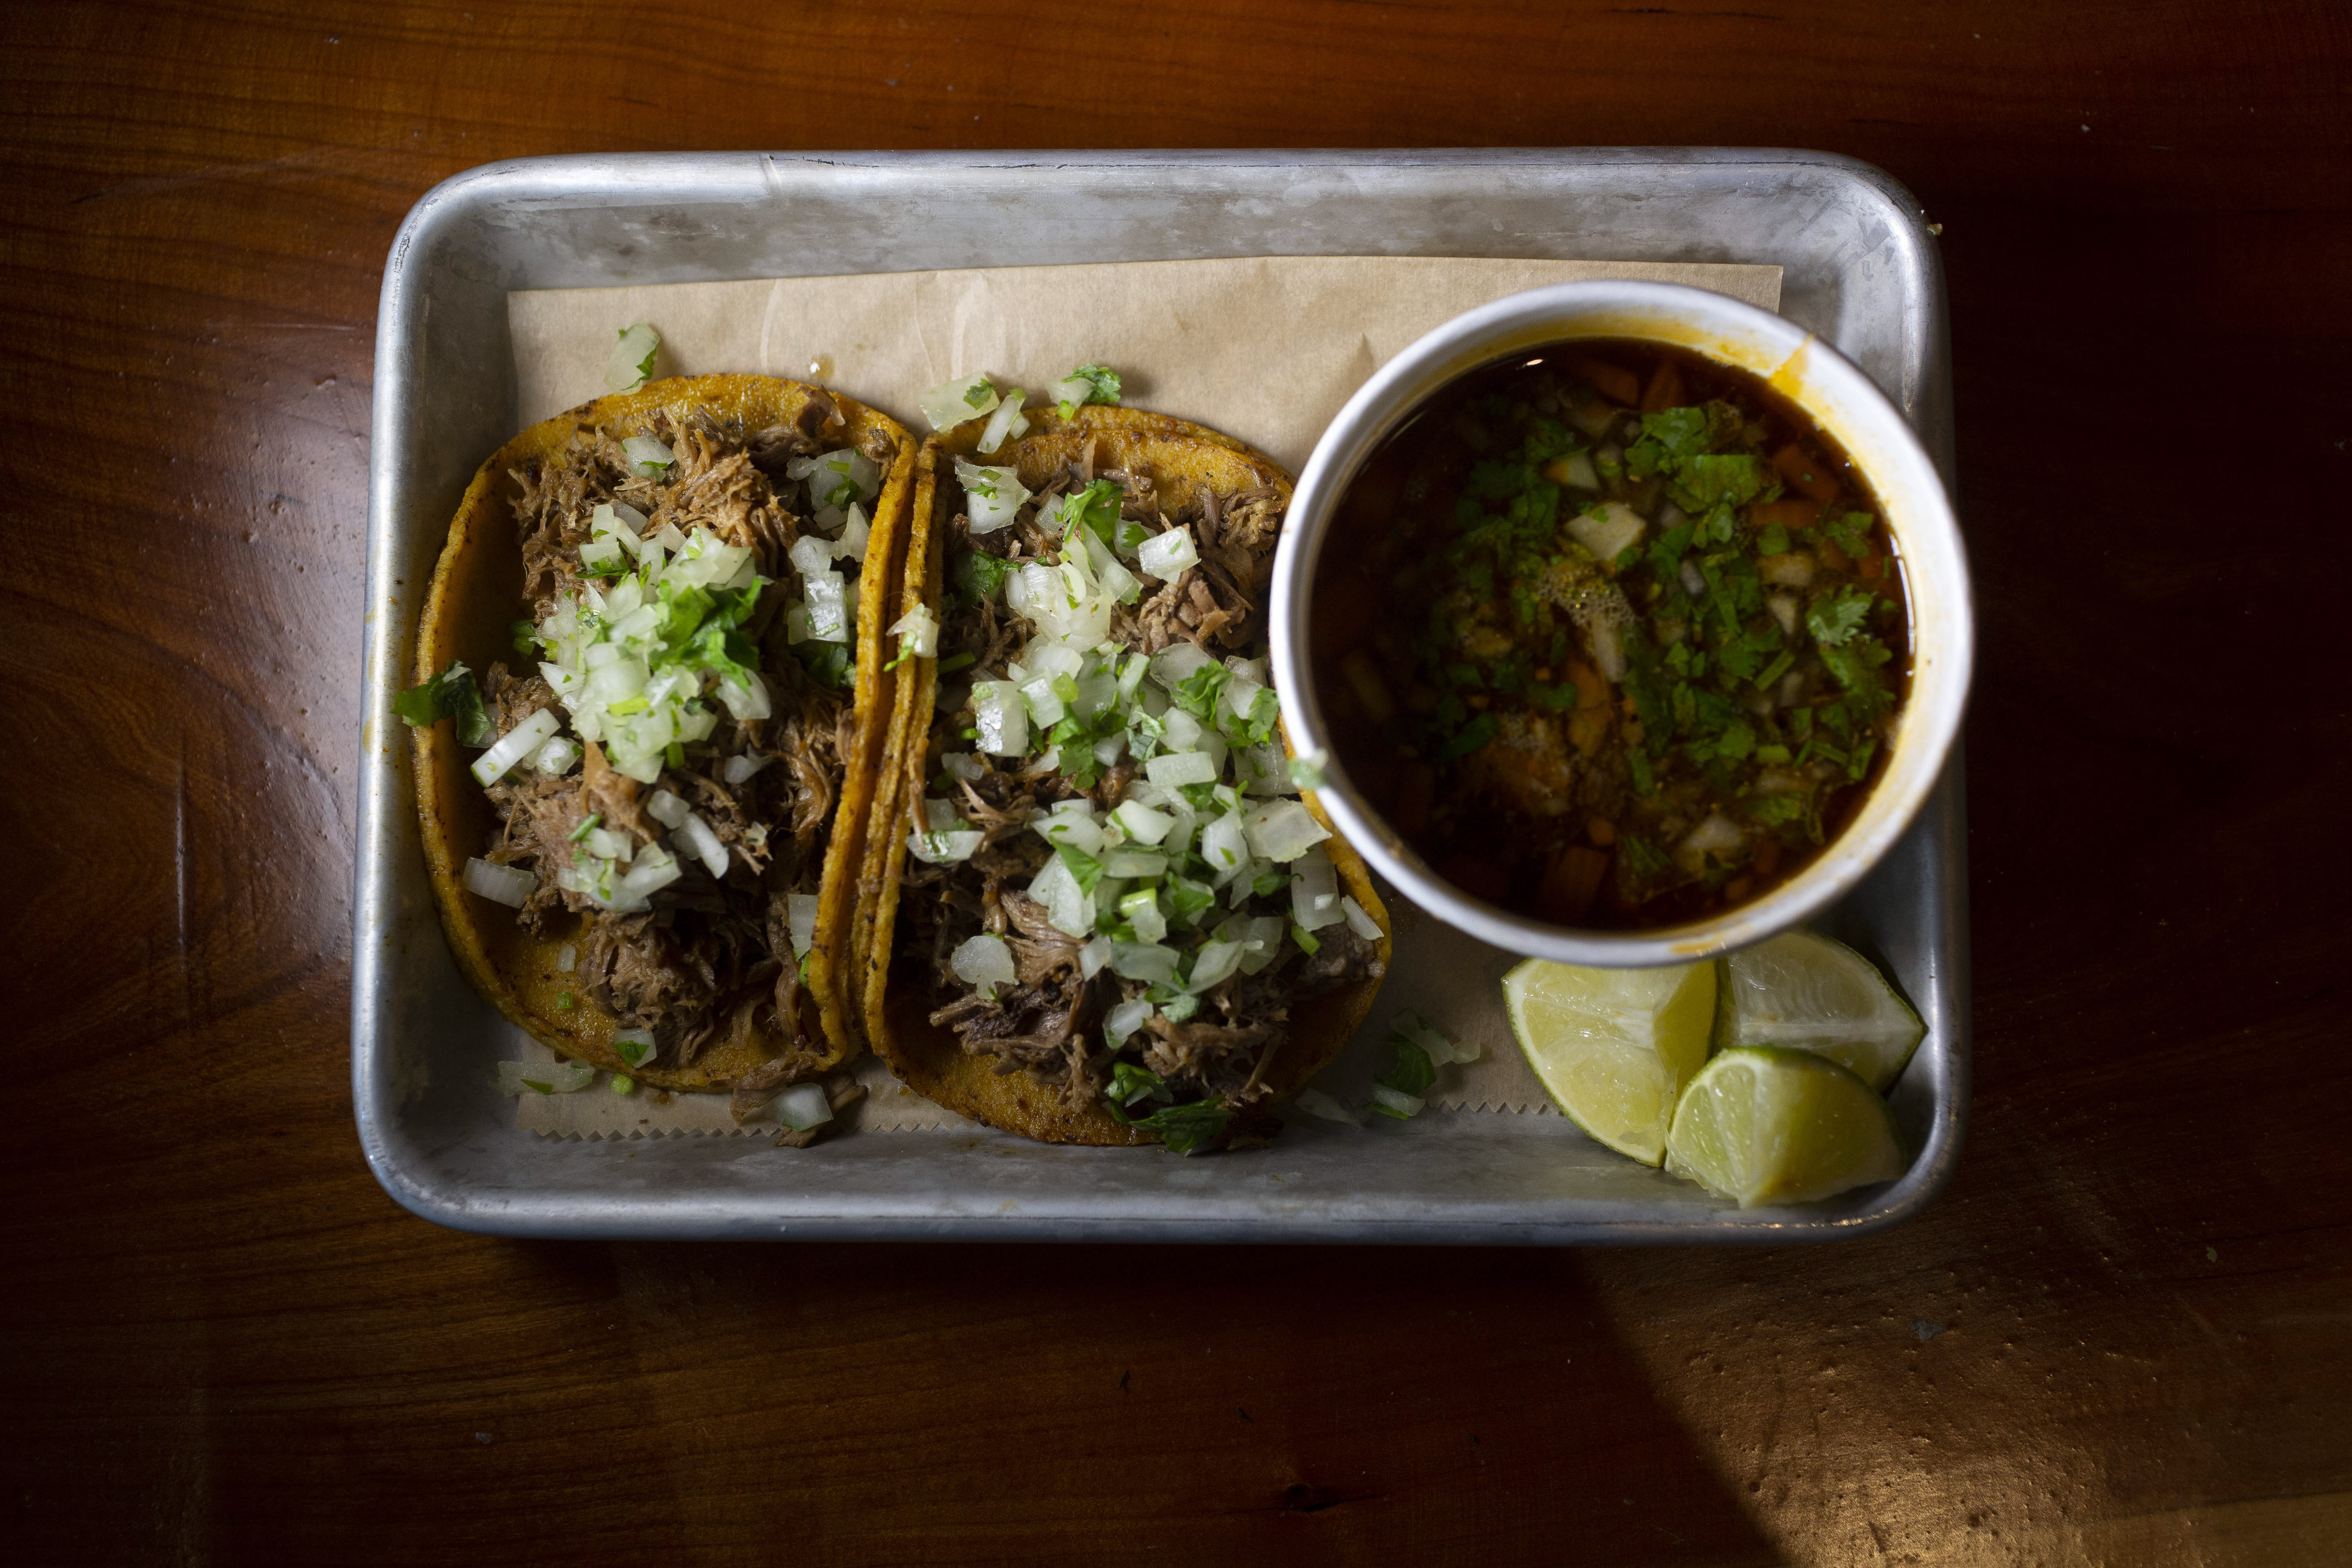 El Barrio Neighborhood Tacos 🌮 - A Modern Mexican Restaurant